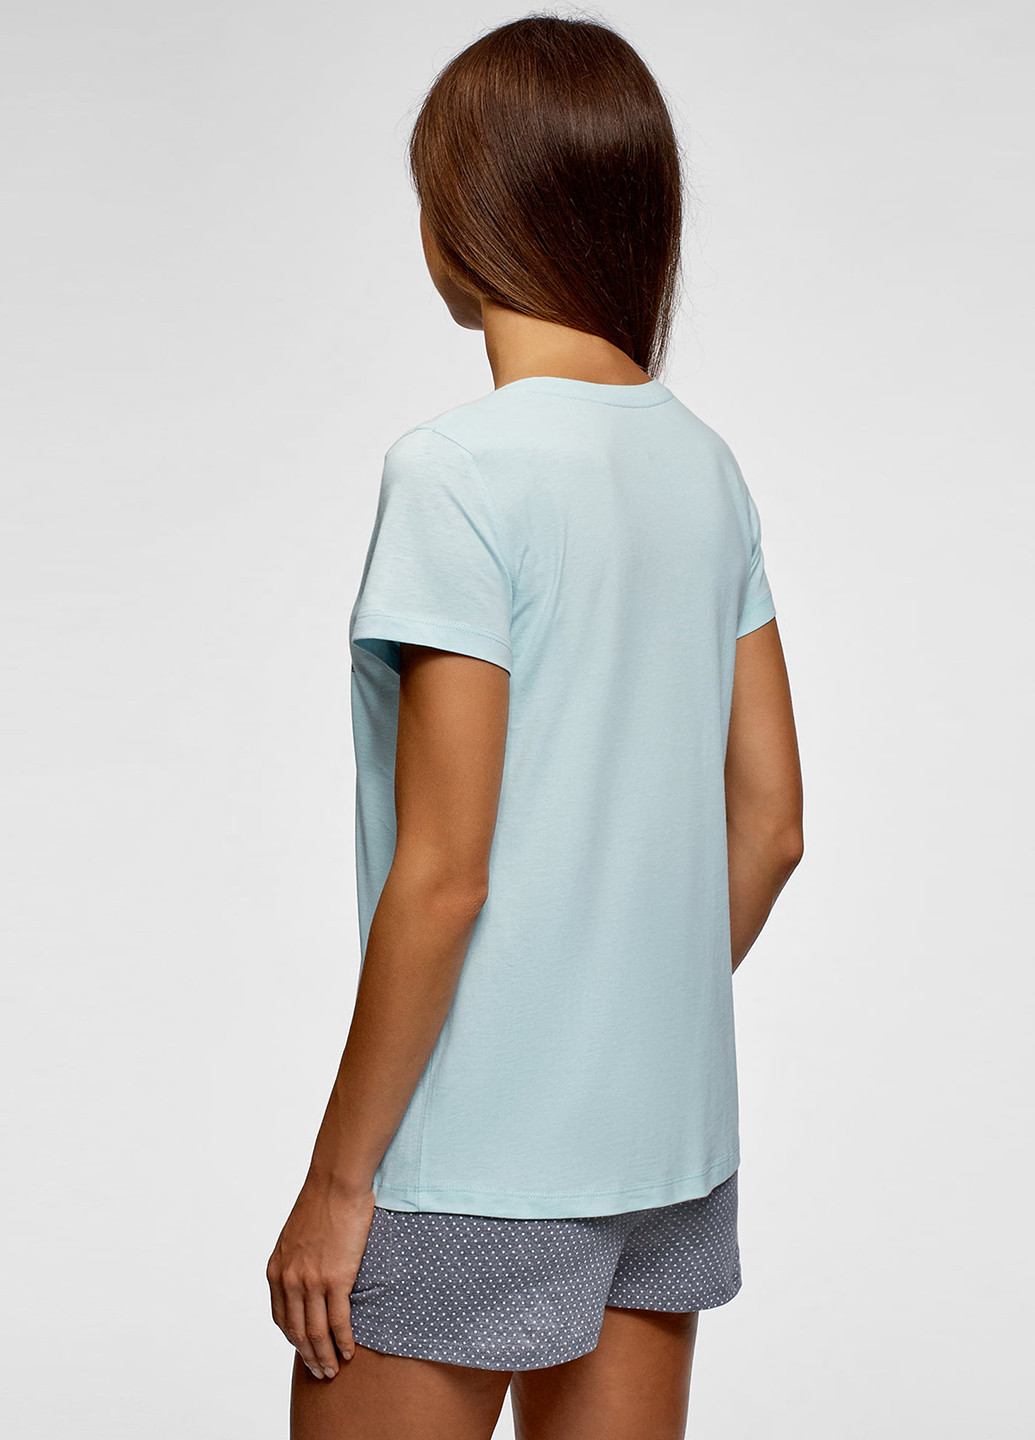 Голубая всесезон пижама (футболка, шорты) футболка + шорты Oodji